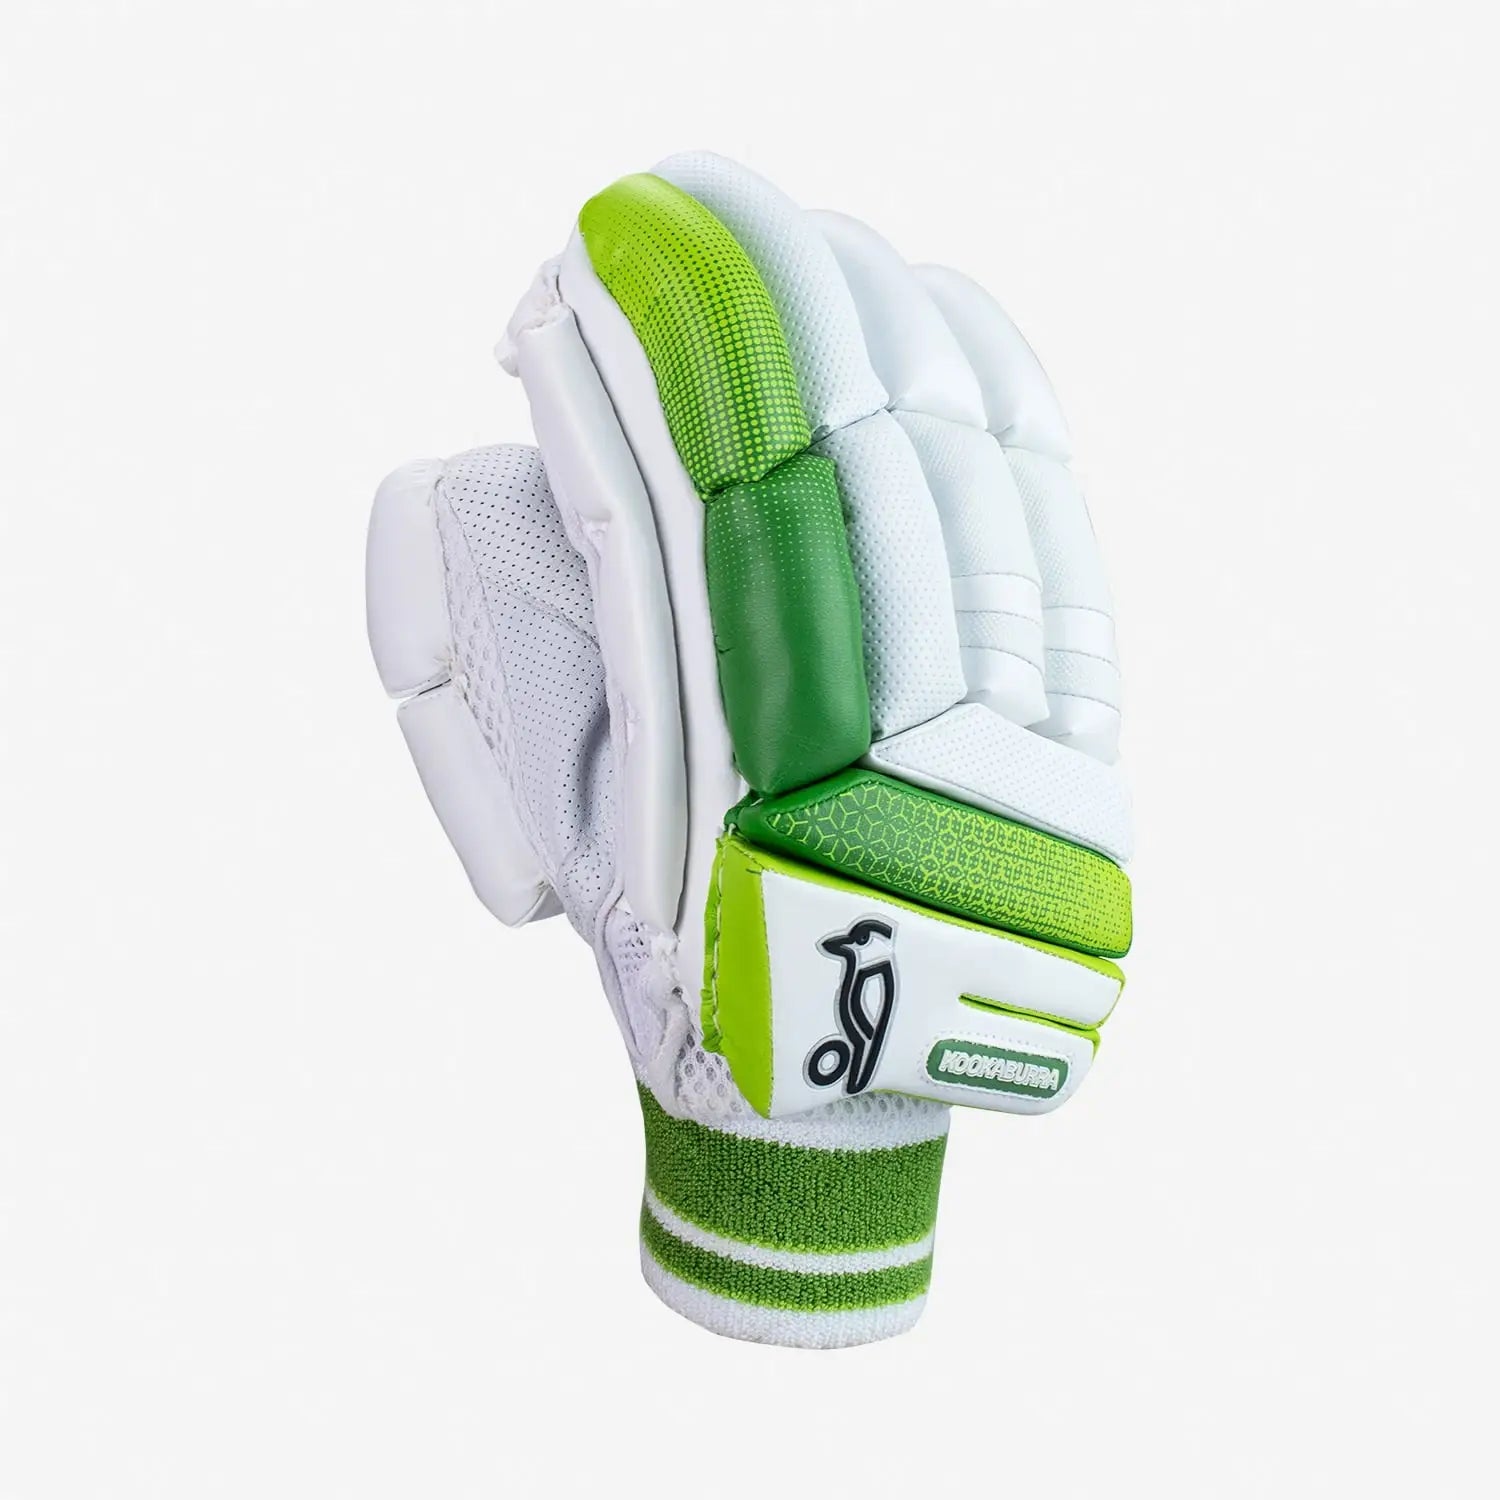 Kookaburra Kahuna 2.1 Cricket Batting Gloves Super Soft Palm - GLOVE - BATTING